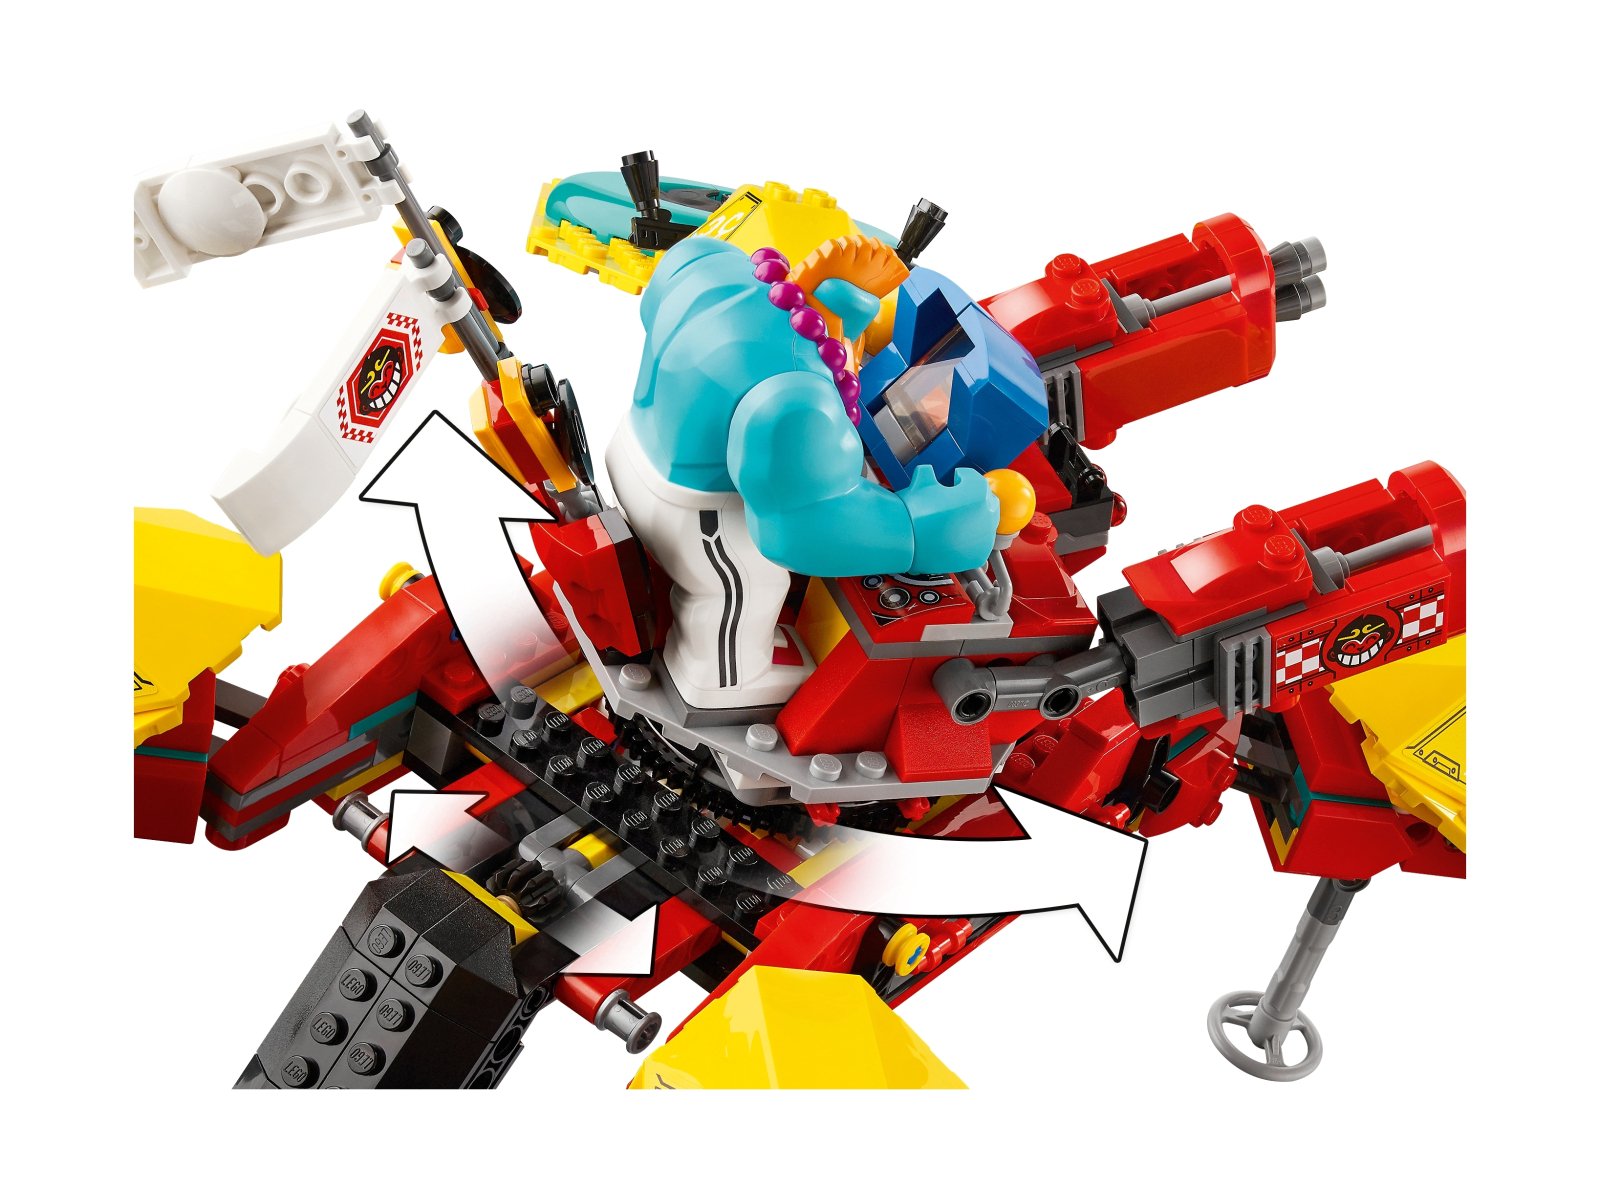 LEGO Monkie Kid Dronkopter ekipy Monkie Kida 80023